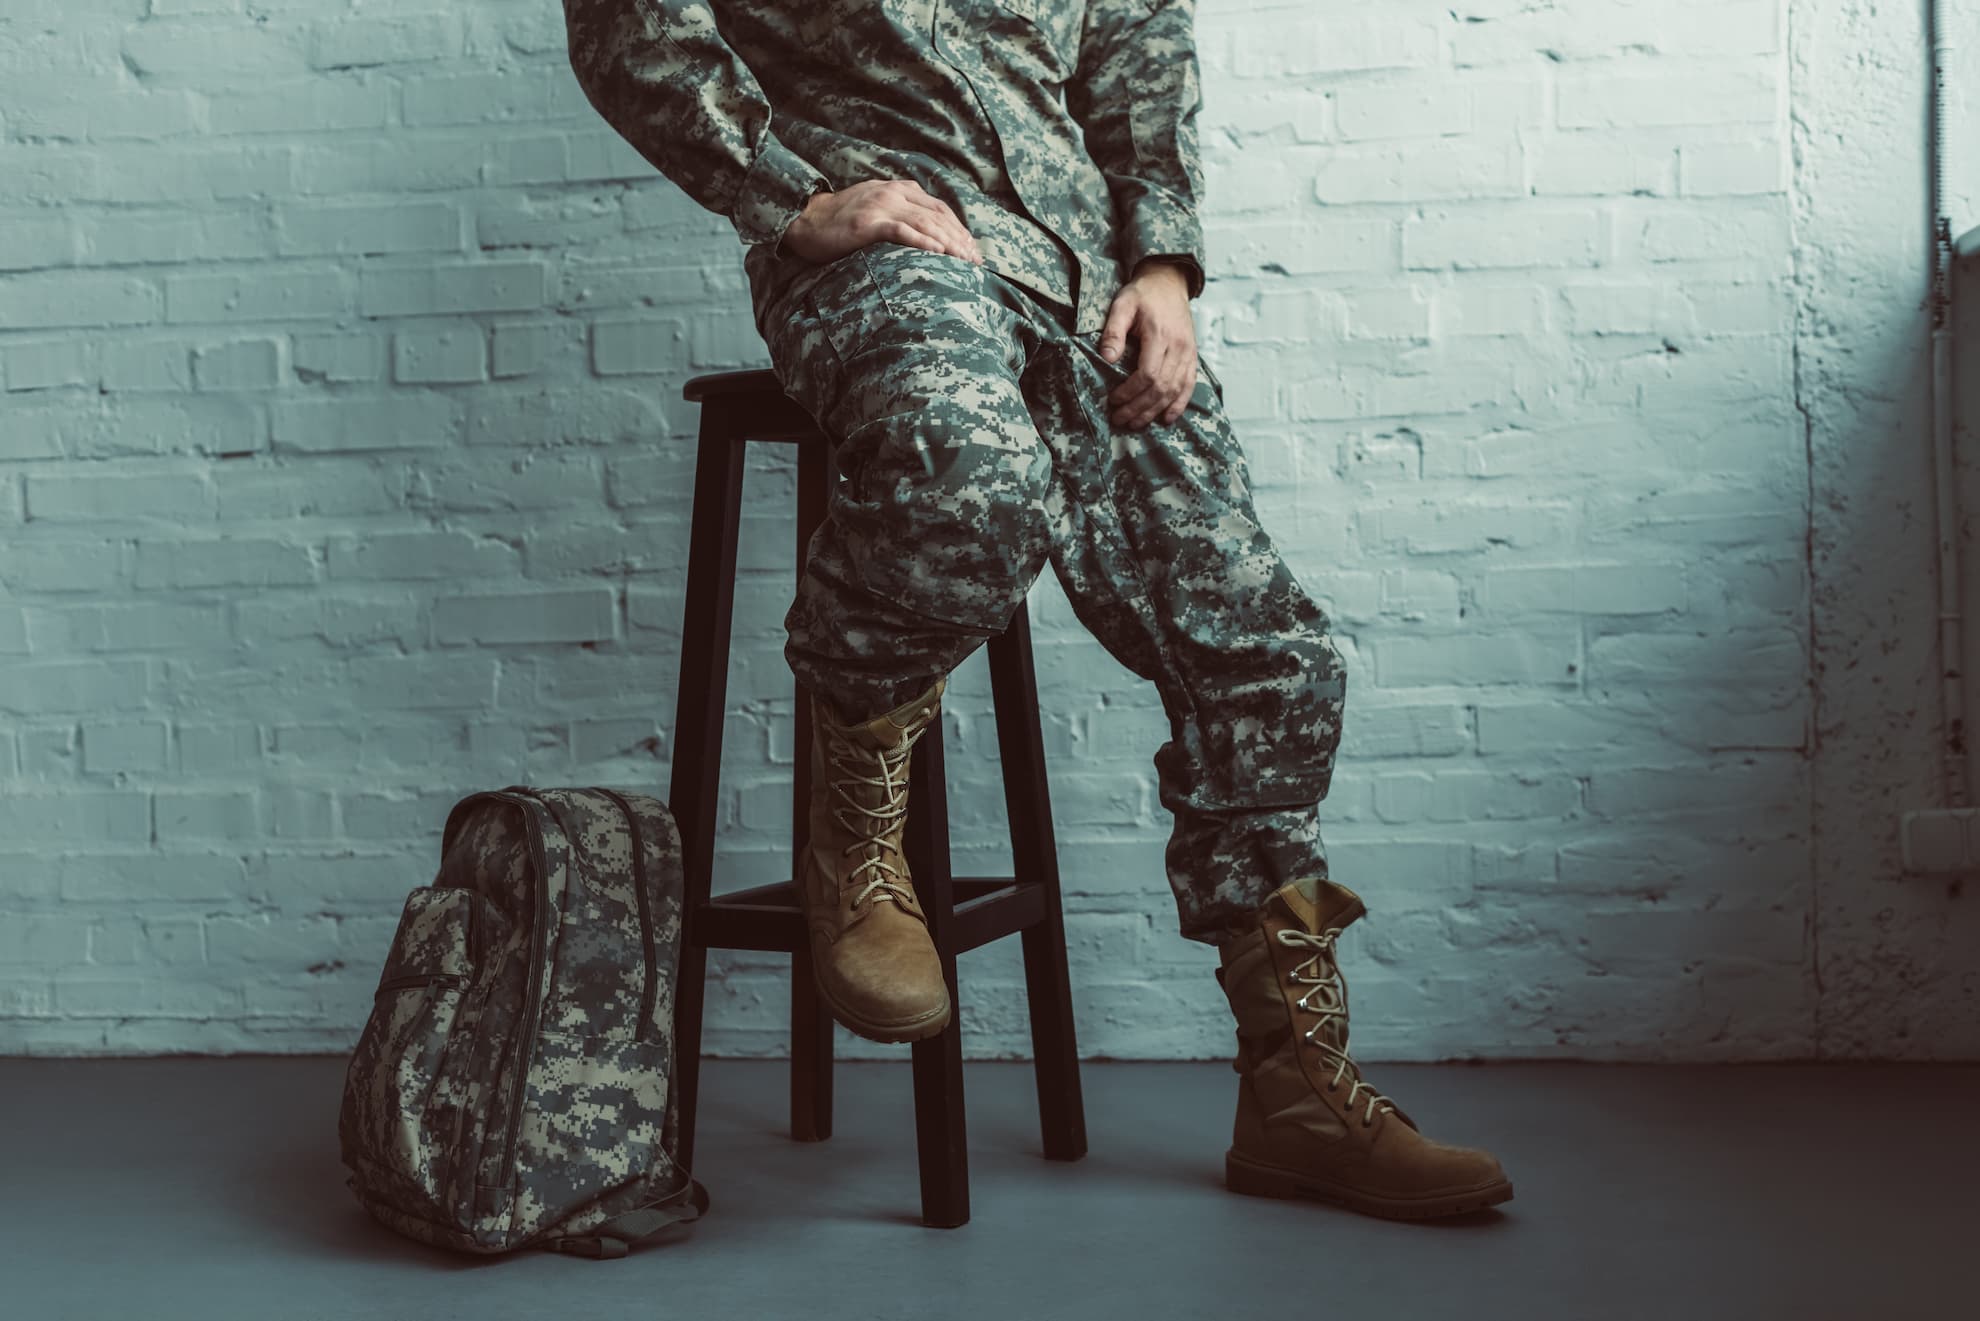 partial-view-of-soldier-in-military-uniform-sittin-2021-08-29-21-23-58-utc